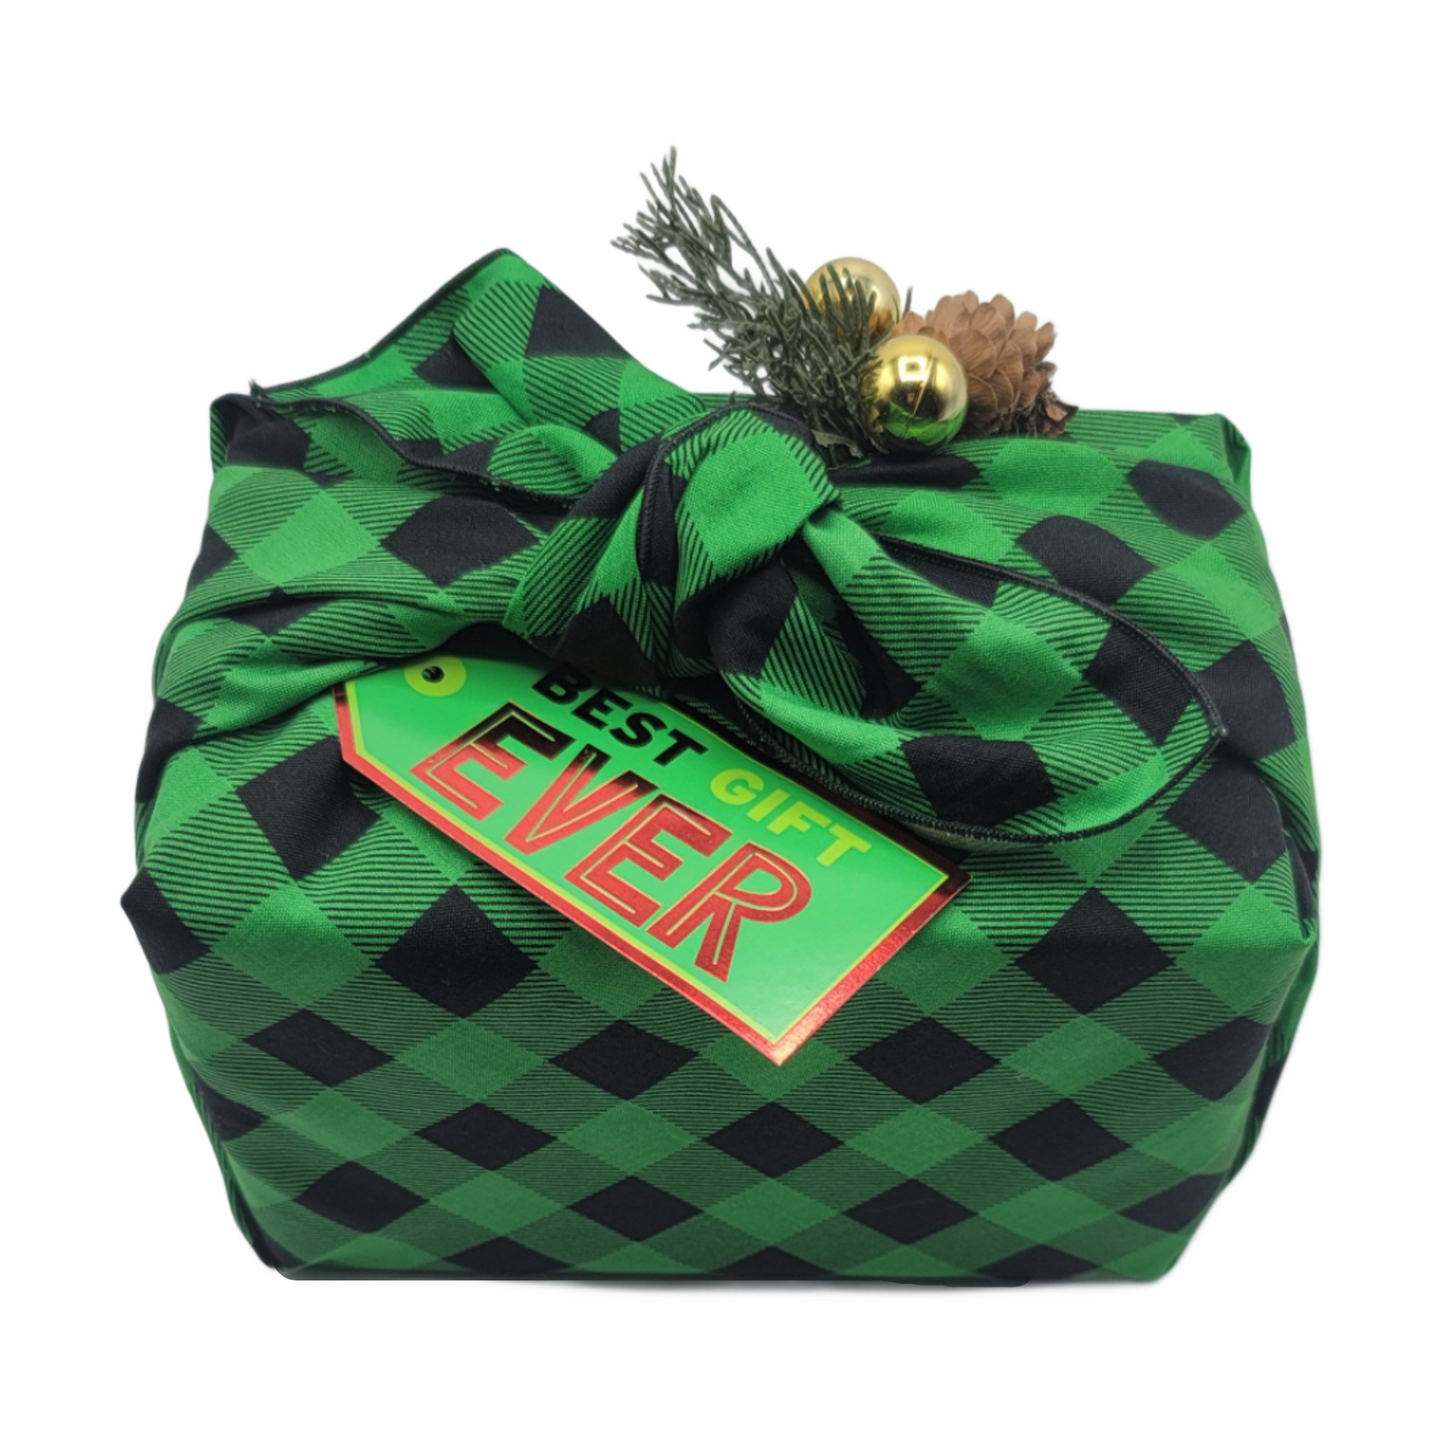 Furoshiki 3 pc Fabric Gift Wrap Kit - Holiday/Green and Black Buffalo Plaid